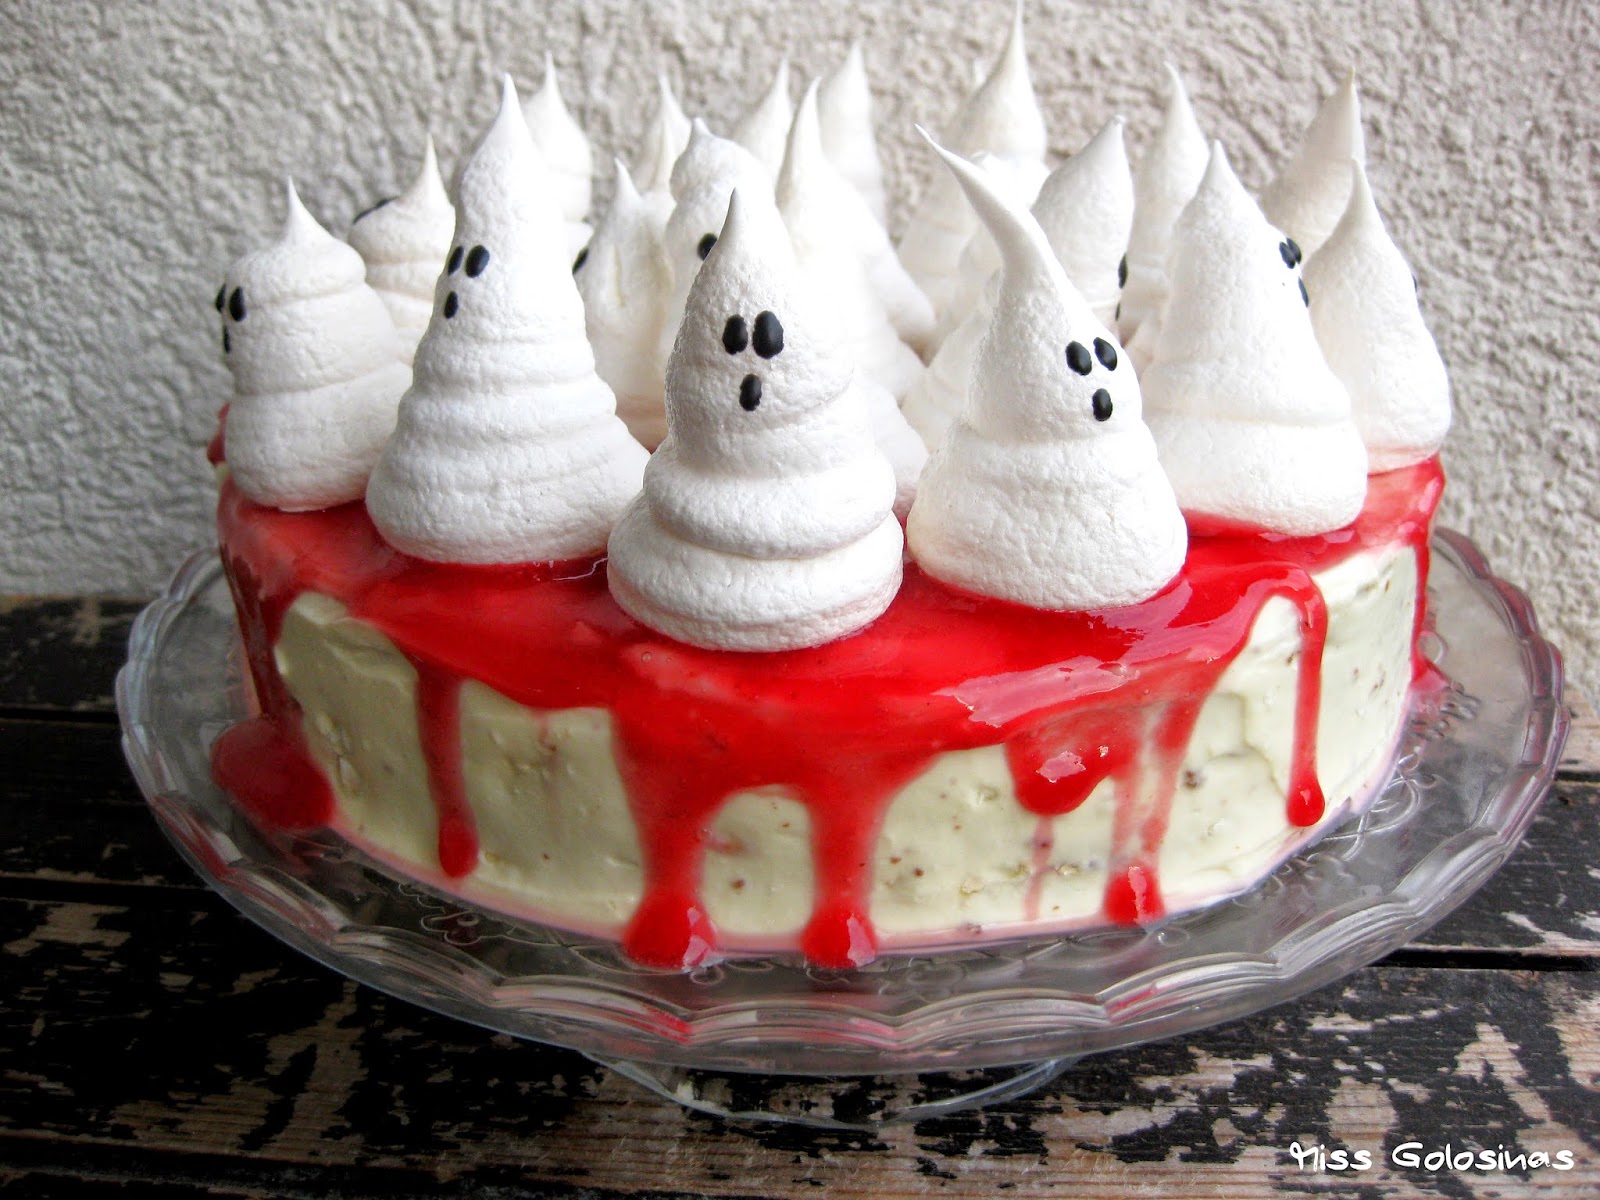 Geistertorte, ghost cake, 